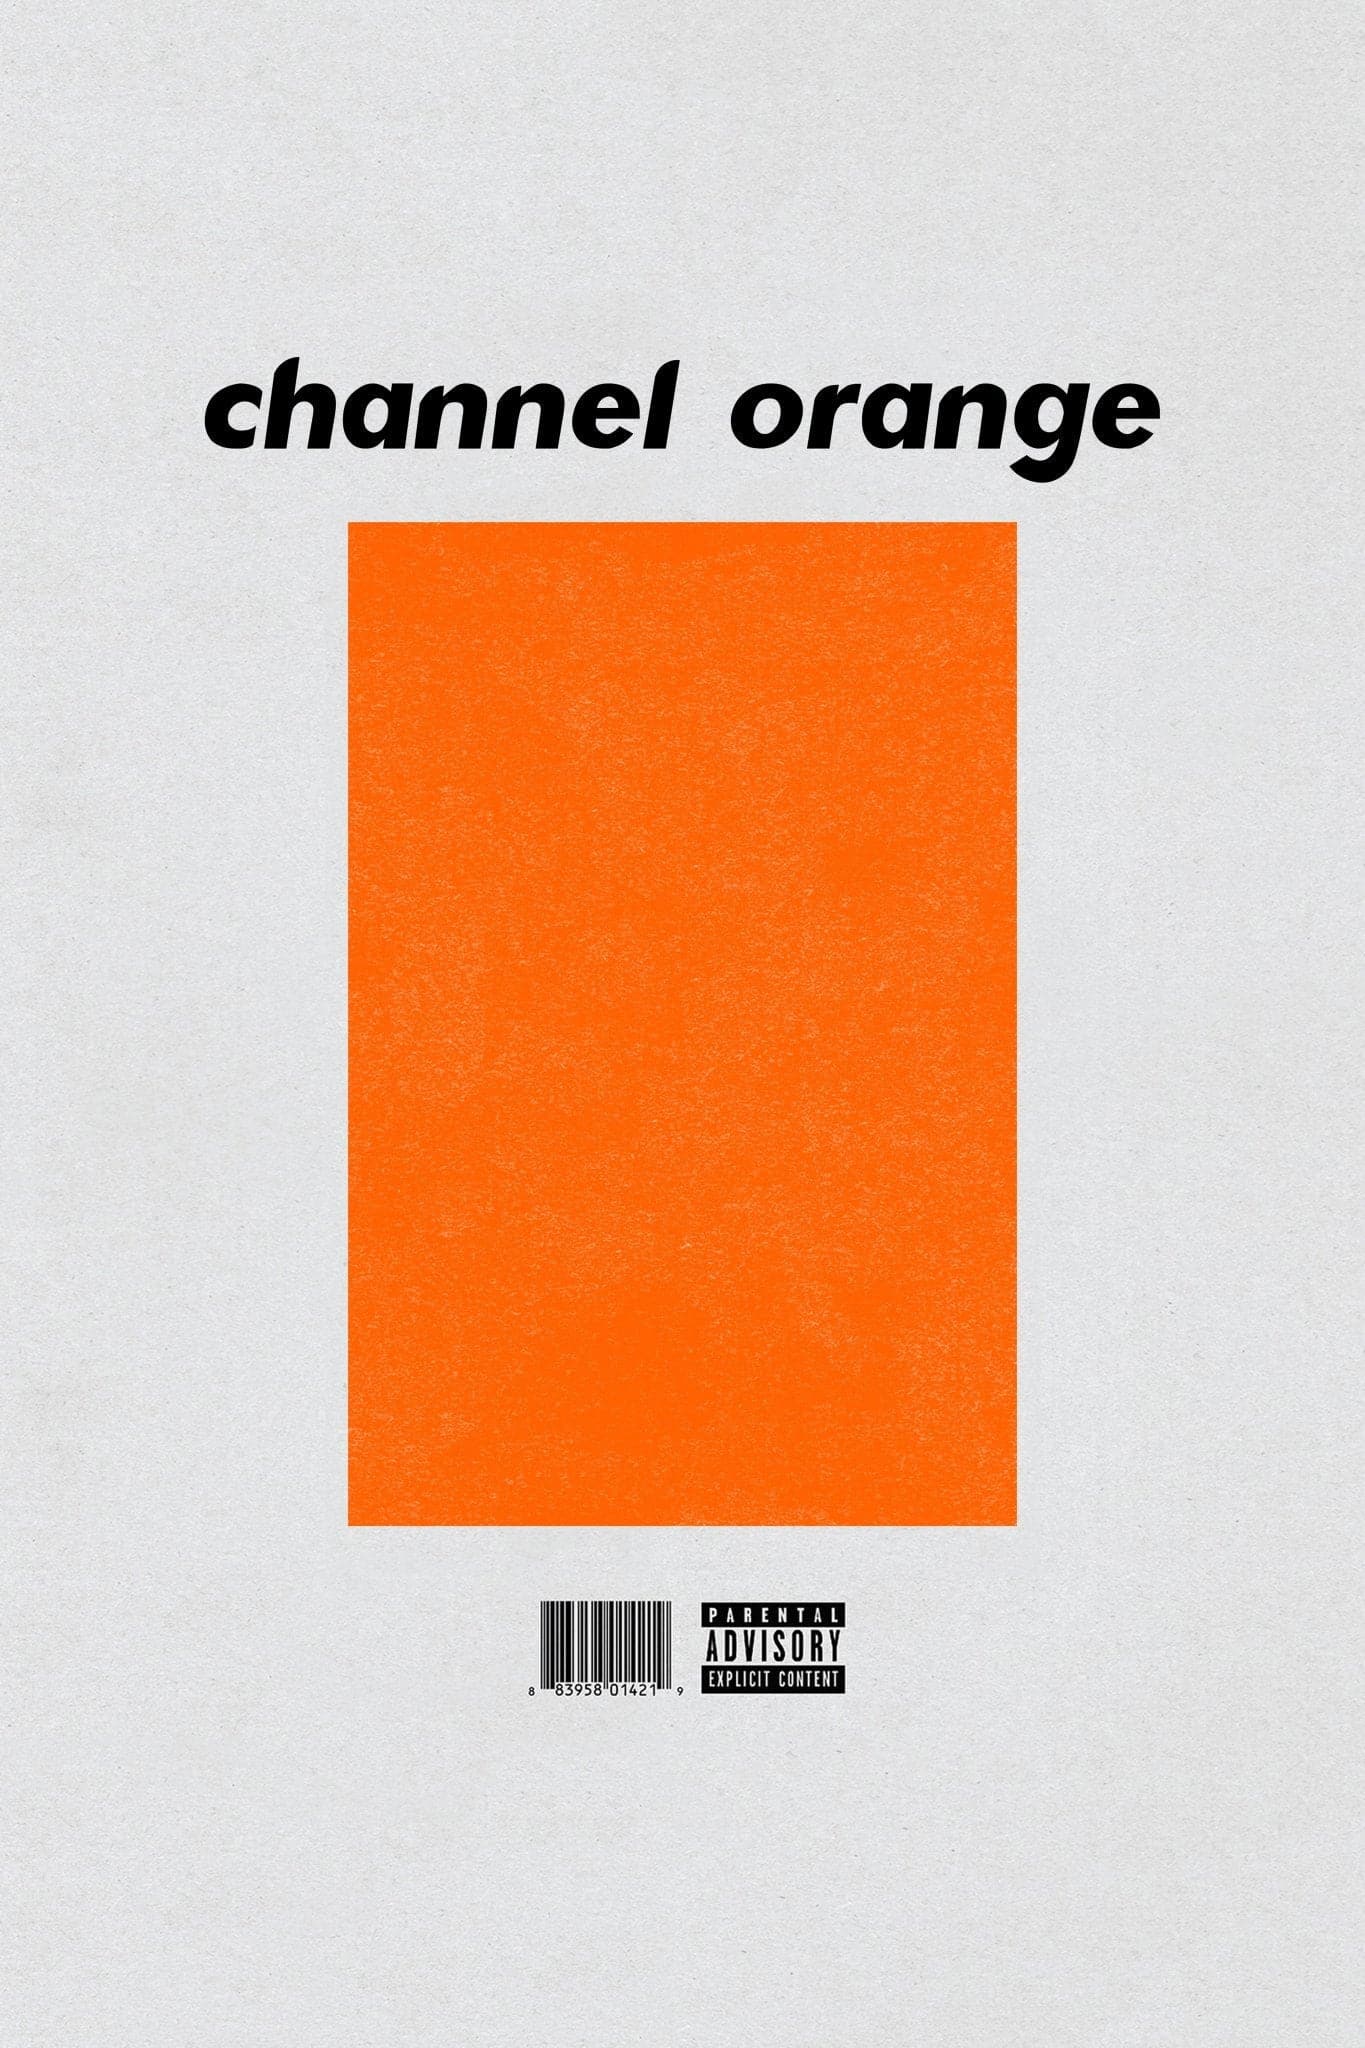 frank ocean chanel orange poster